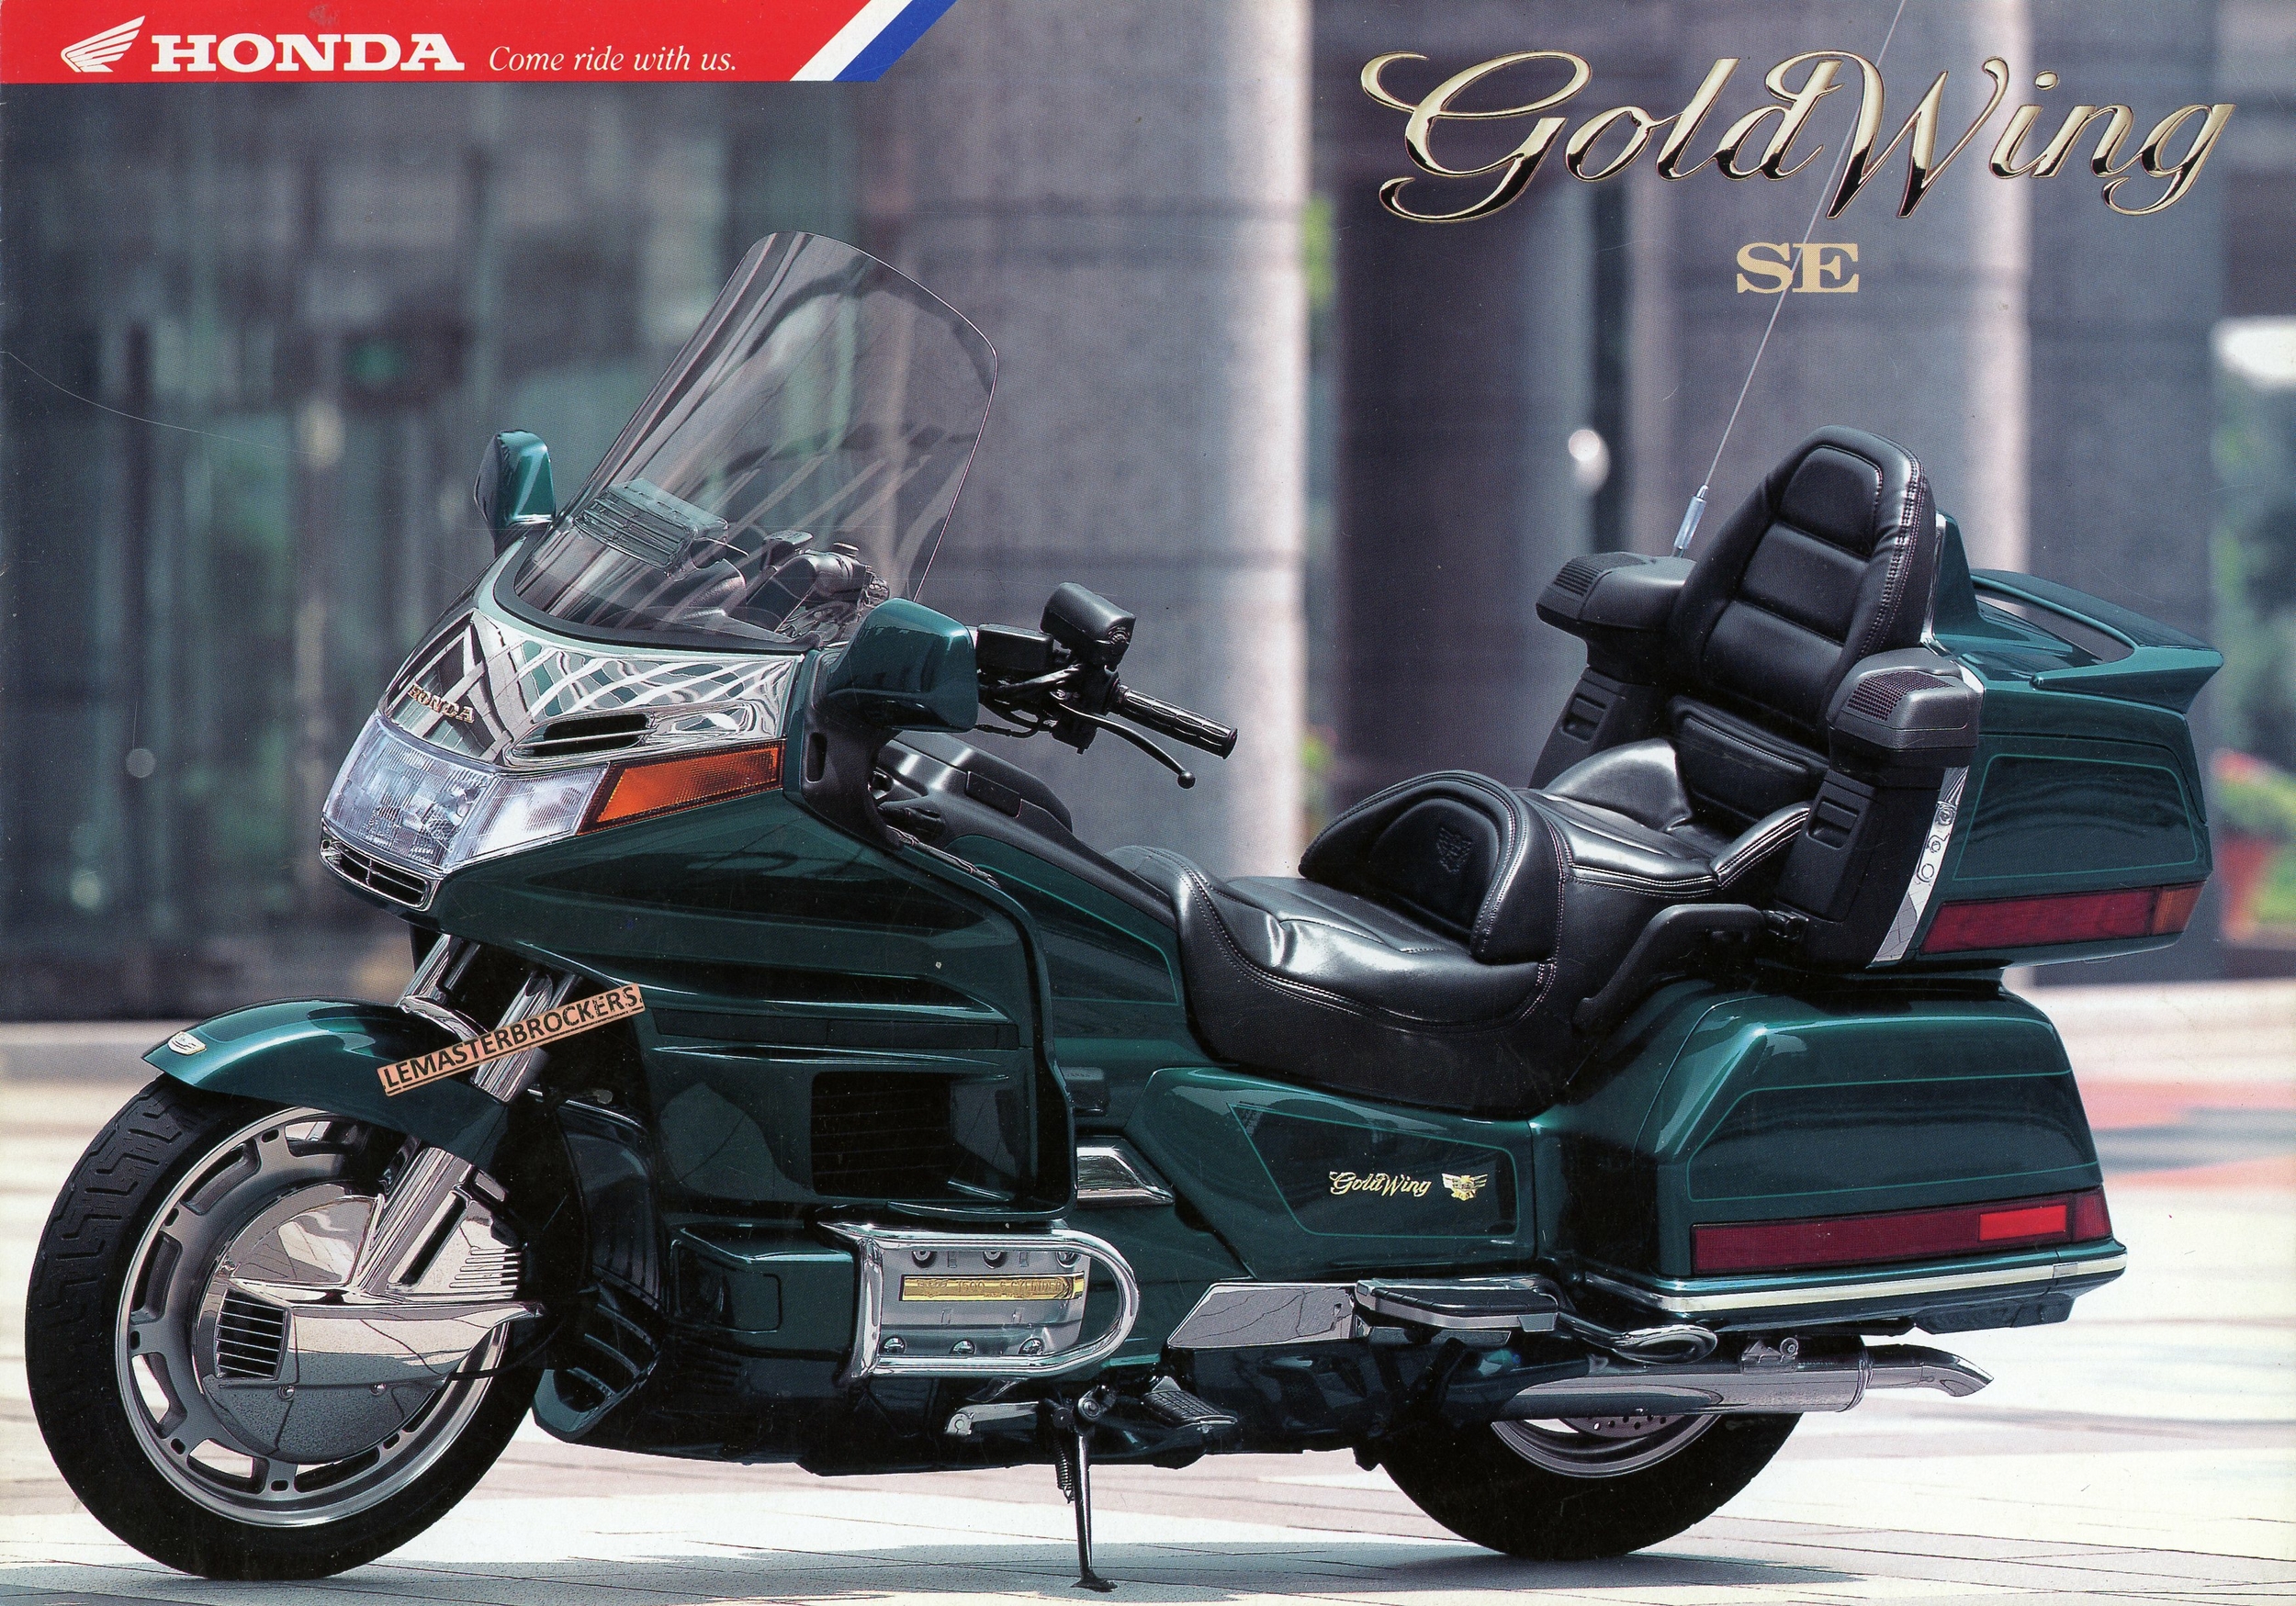 BROCHURE-moto-honda-gl1500-se-goldwing-se-gl1500se-LEMASTERBROCKERS-1995